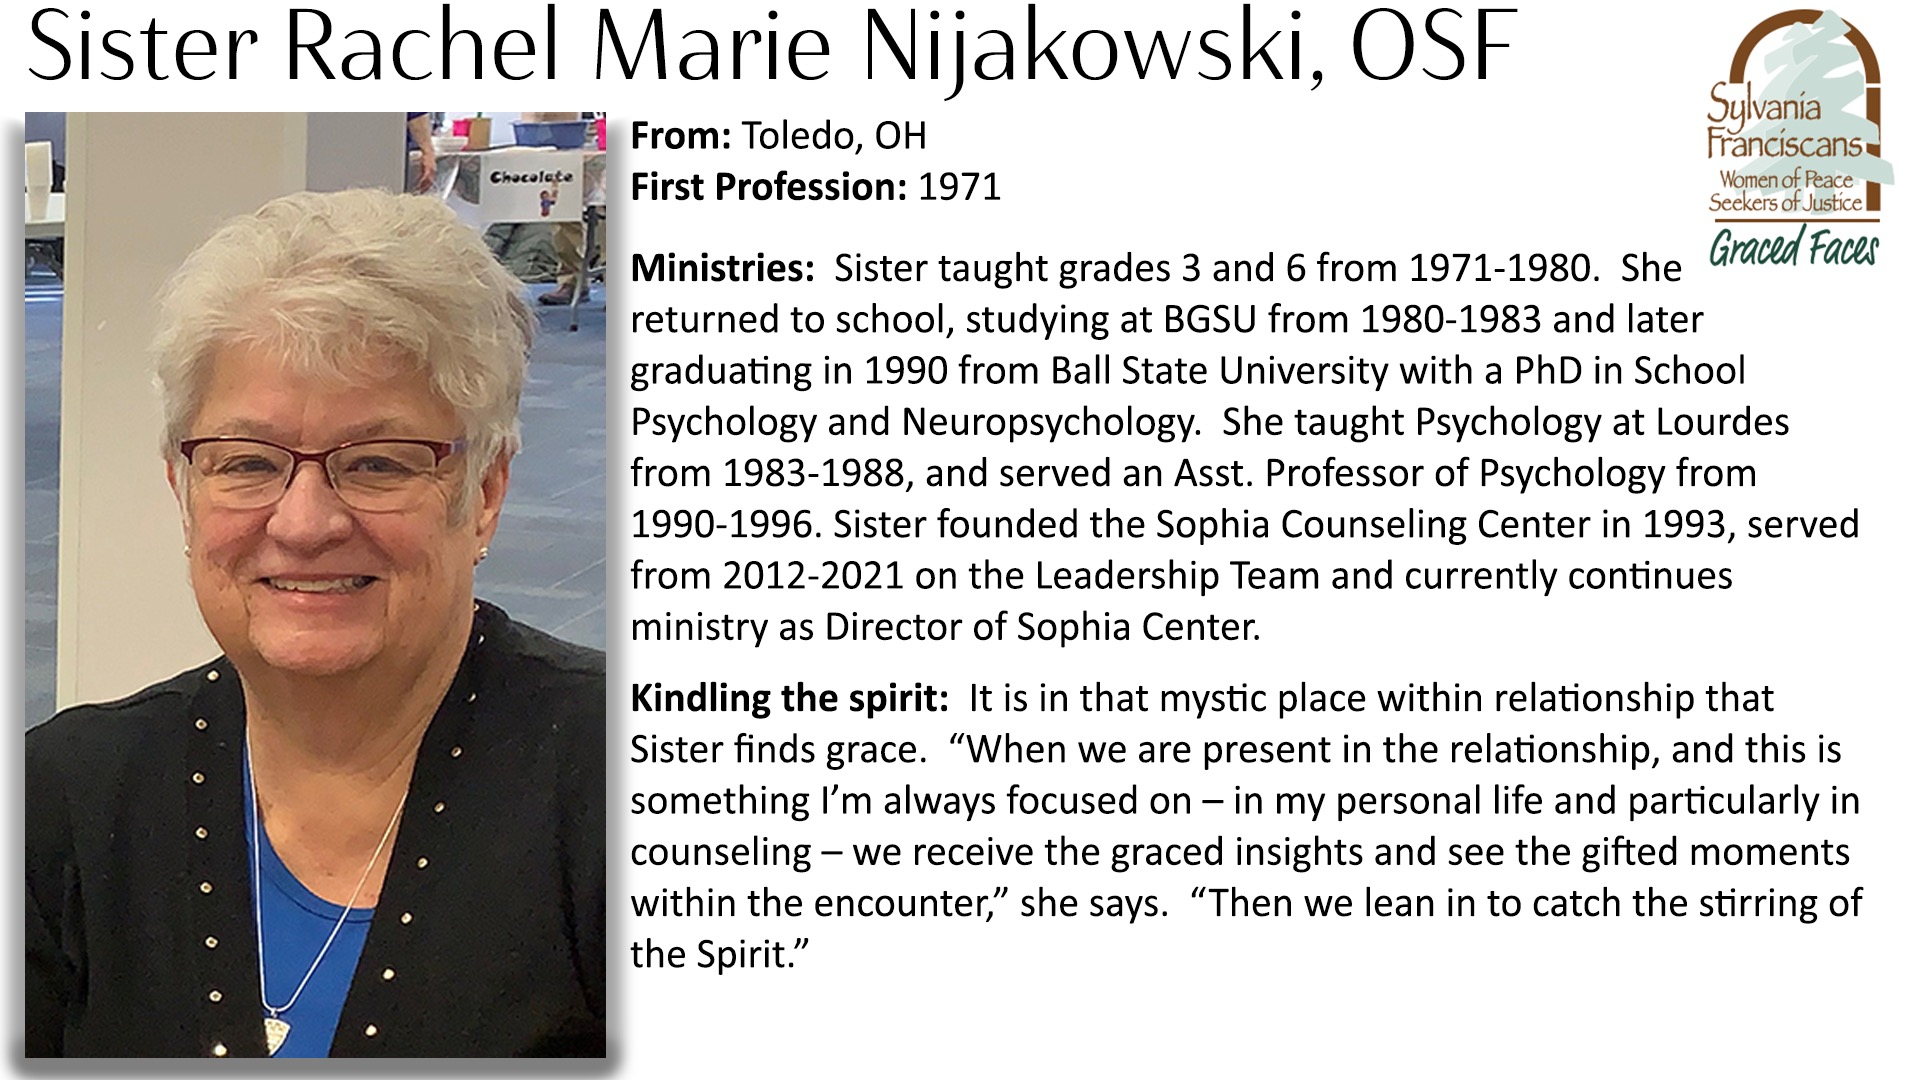 Sister Rachel Marie Nijakowski, OSF, OSF